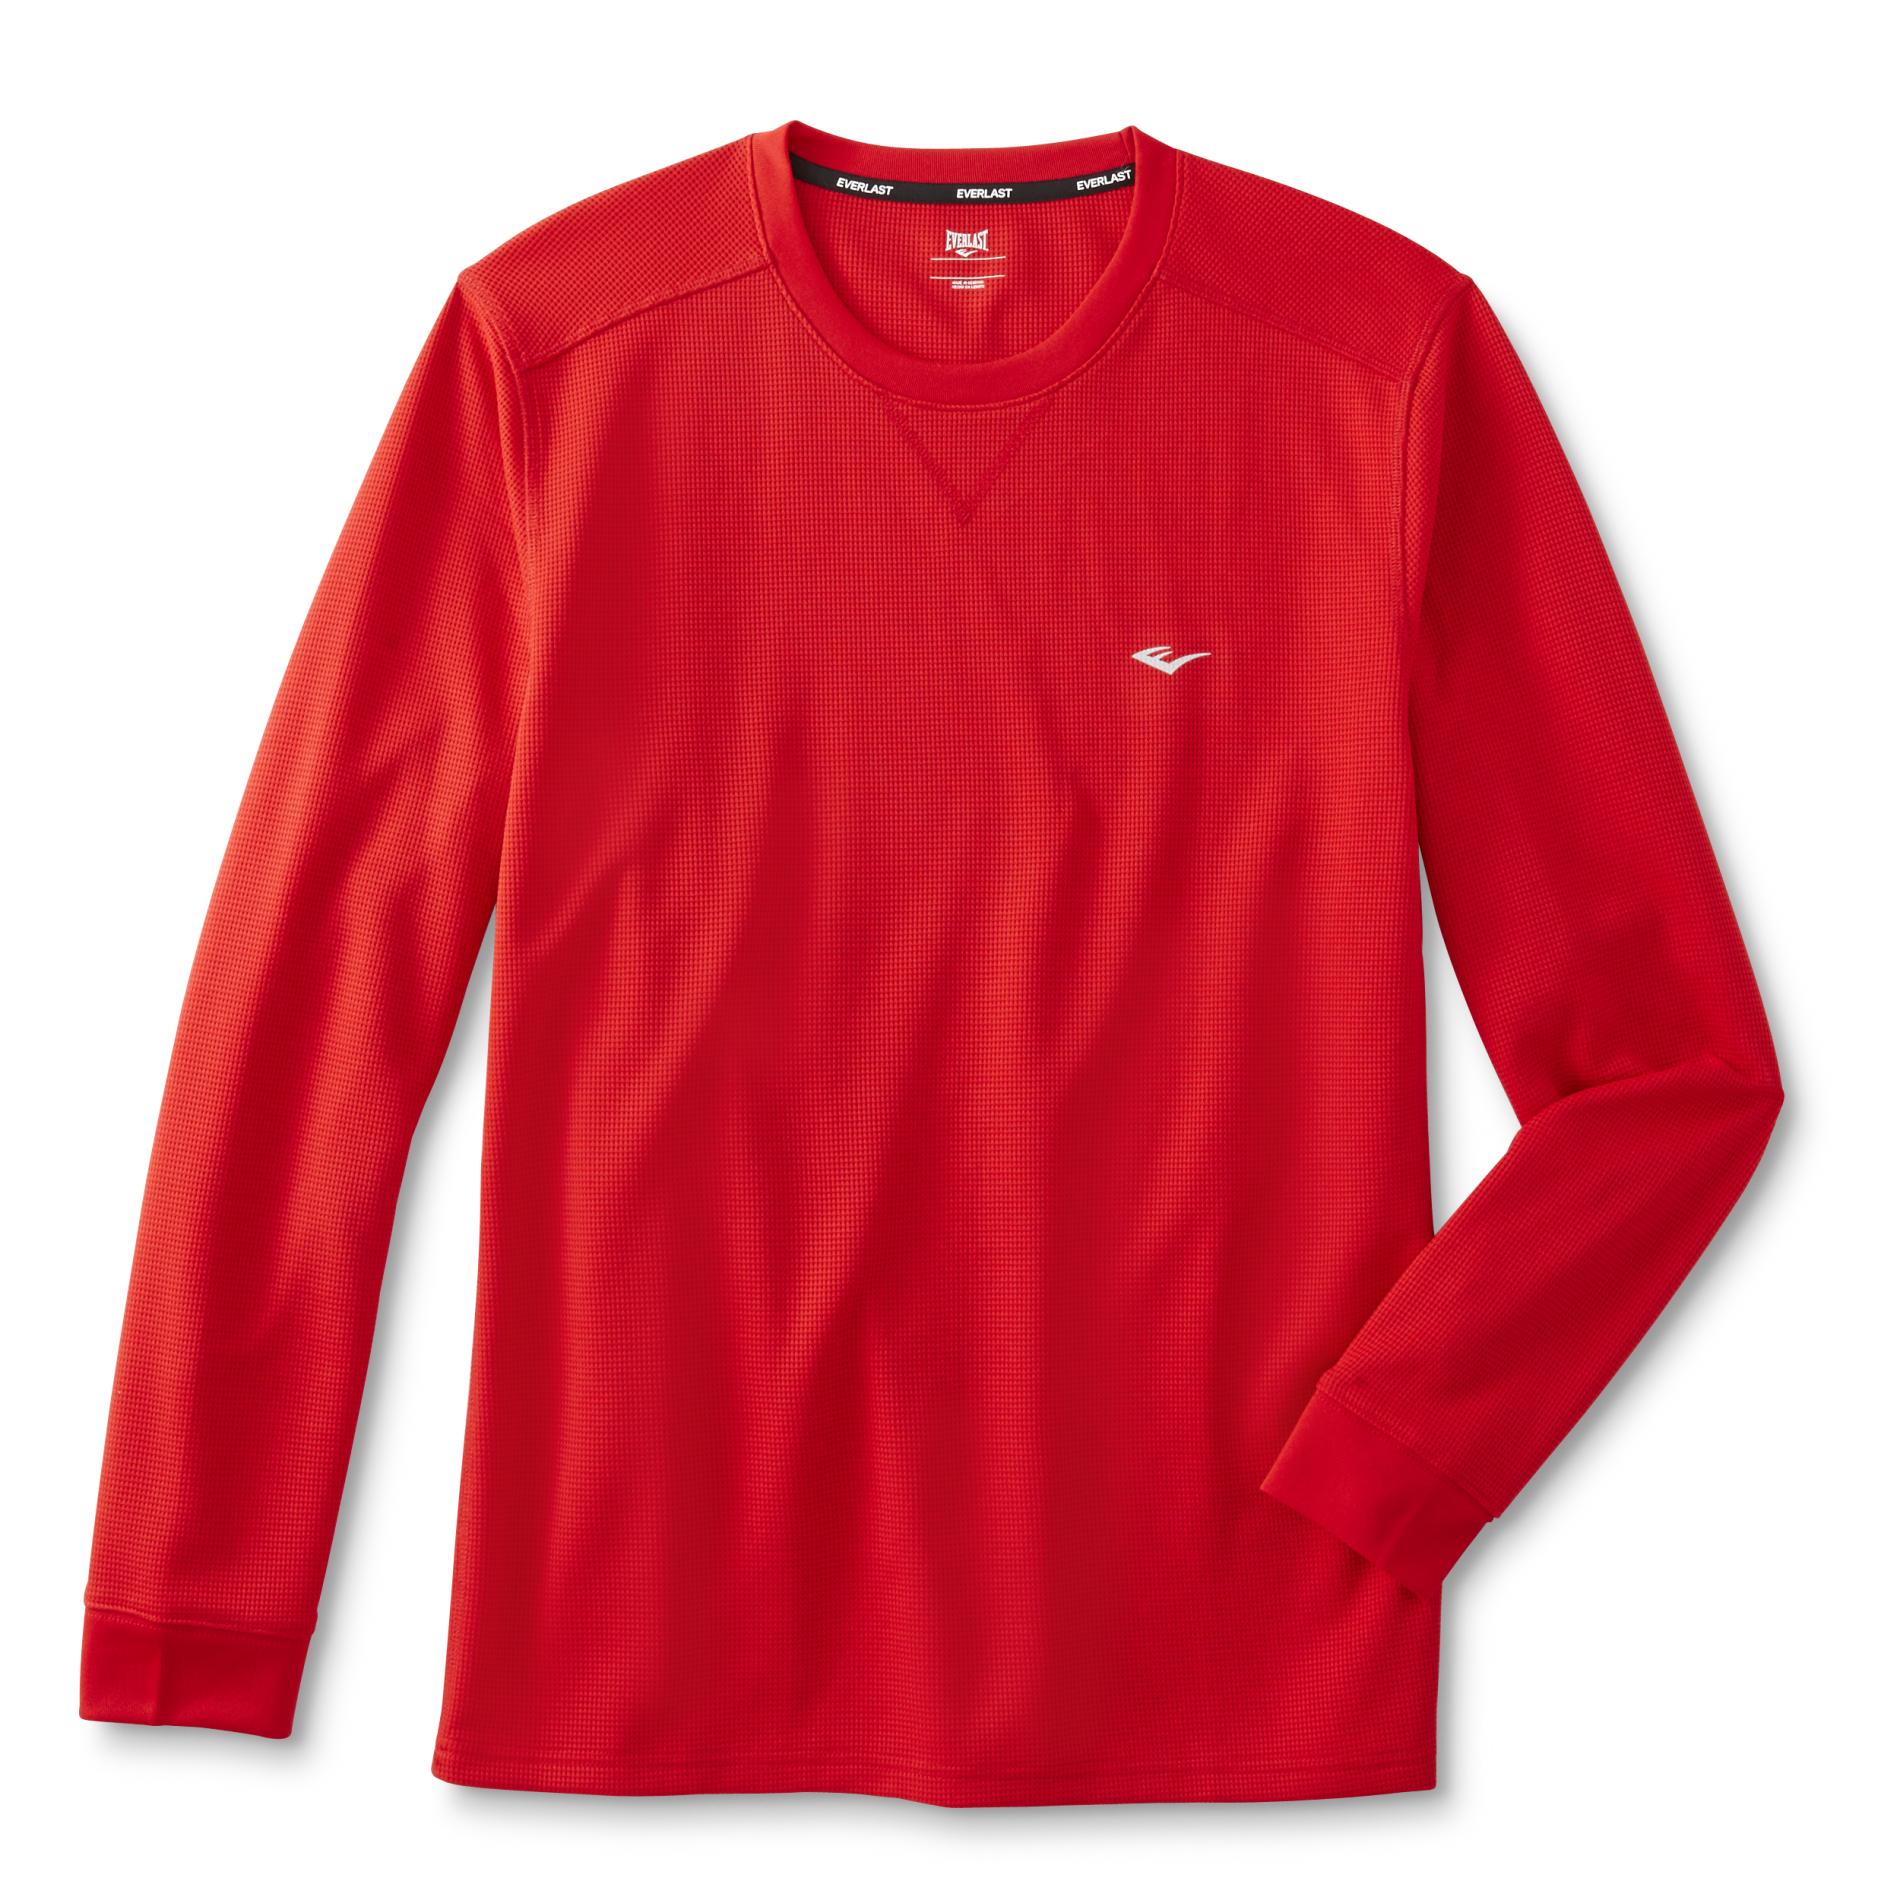 Everlast&reg; Men's Thermal Athletic Shirt